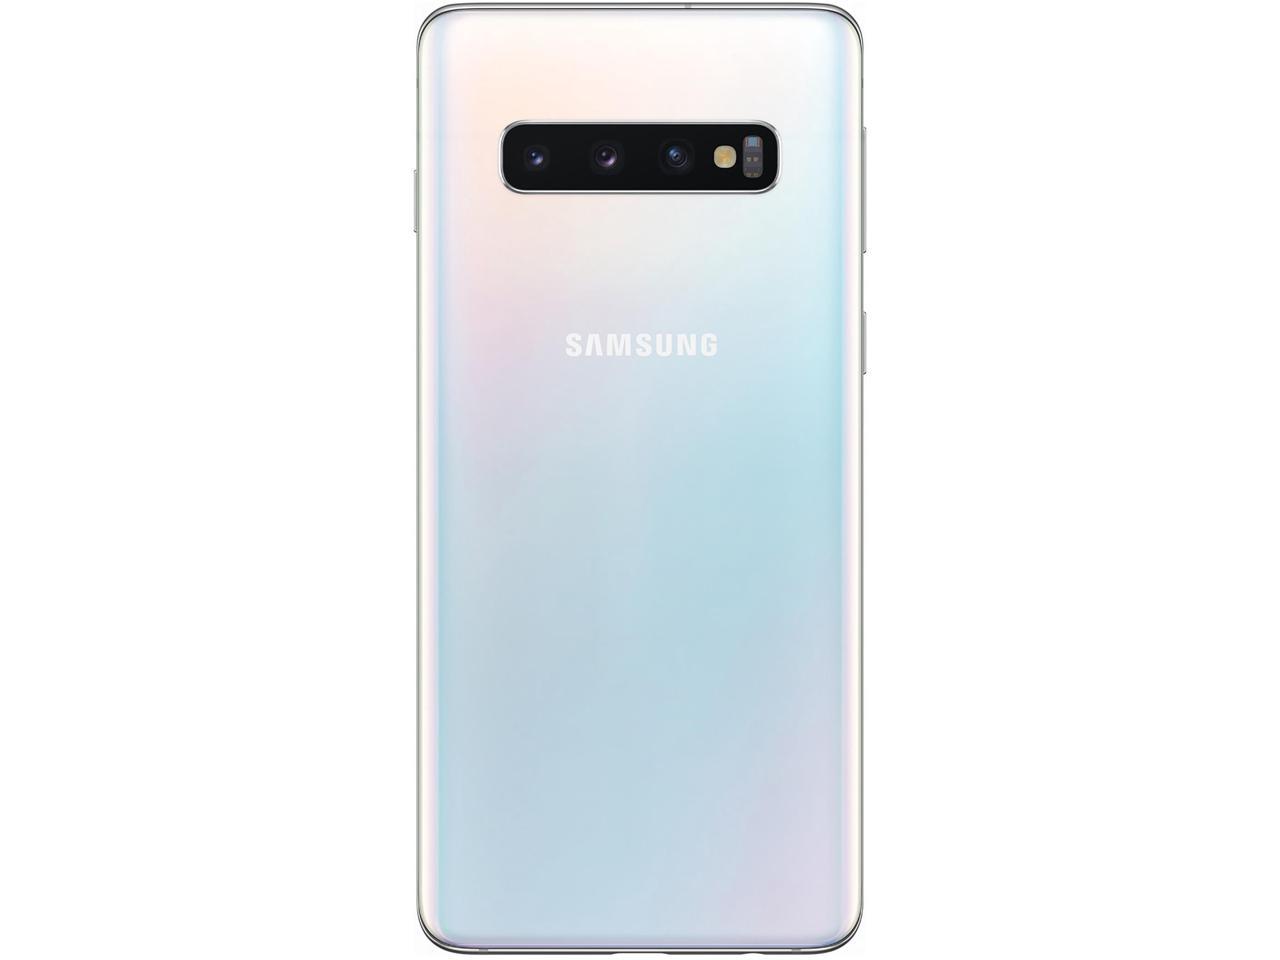 Samsung Galaxy S10 G973 128GB Unlocked GSM LTE Phone with Triple 12 MP + 12 MP + 16 MP Rear Camera - Prism White (International Version)